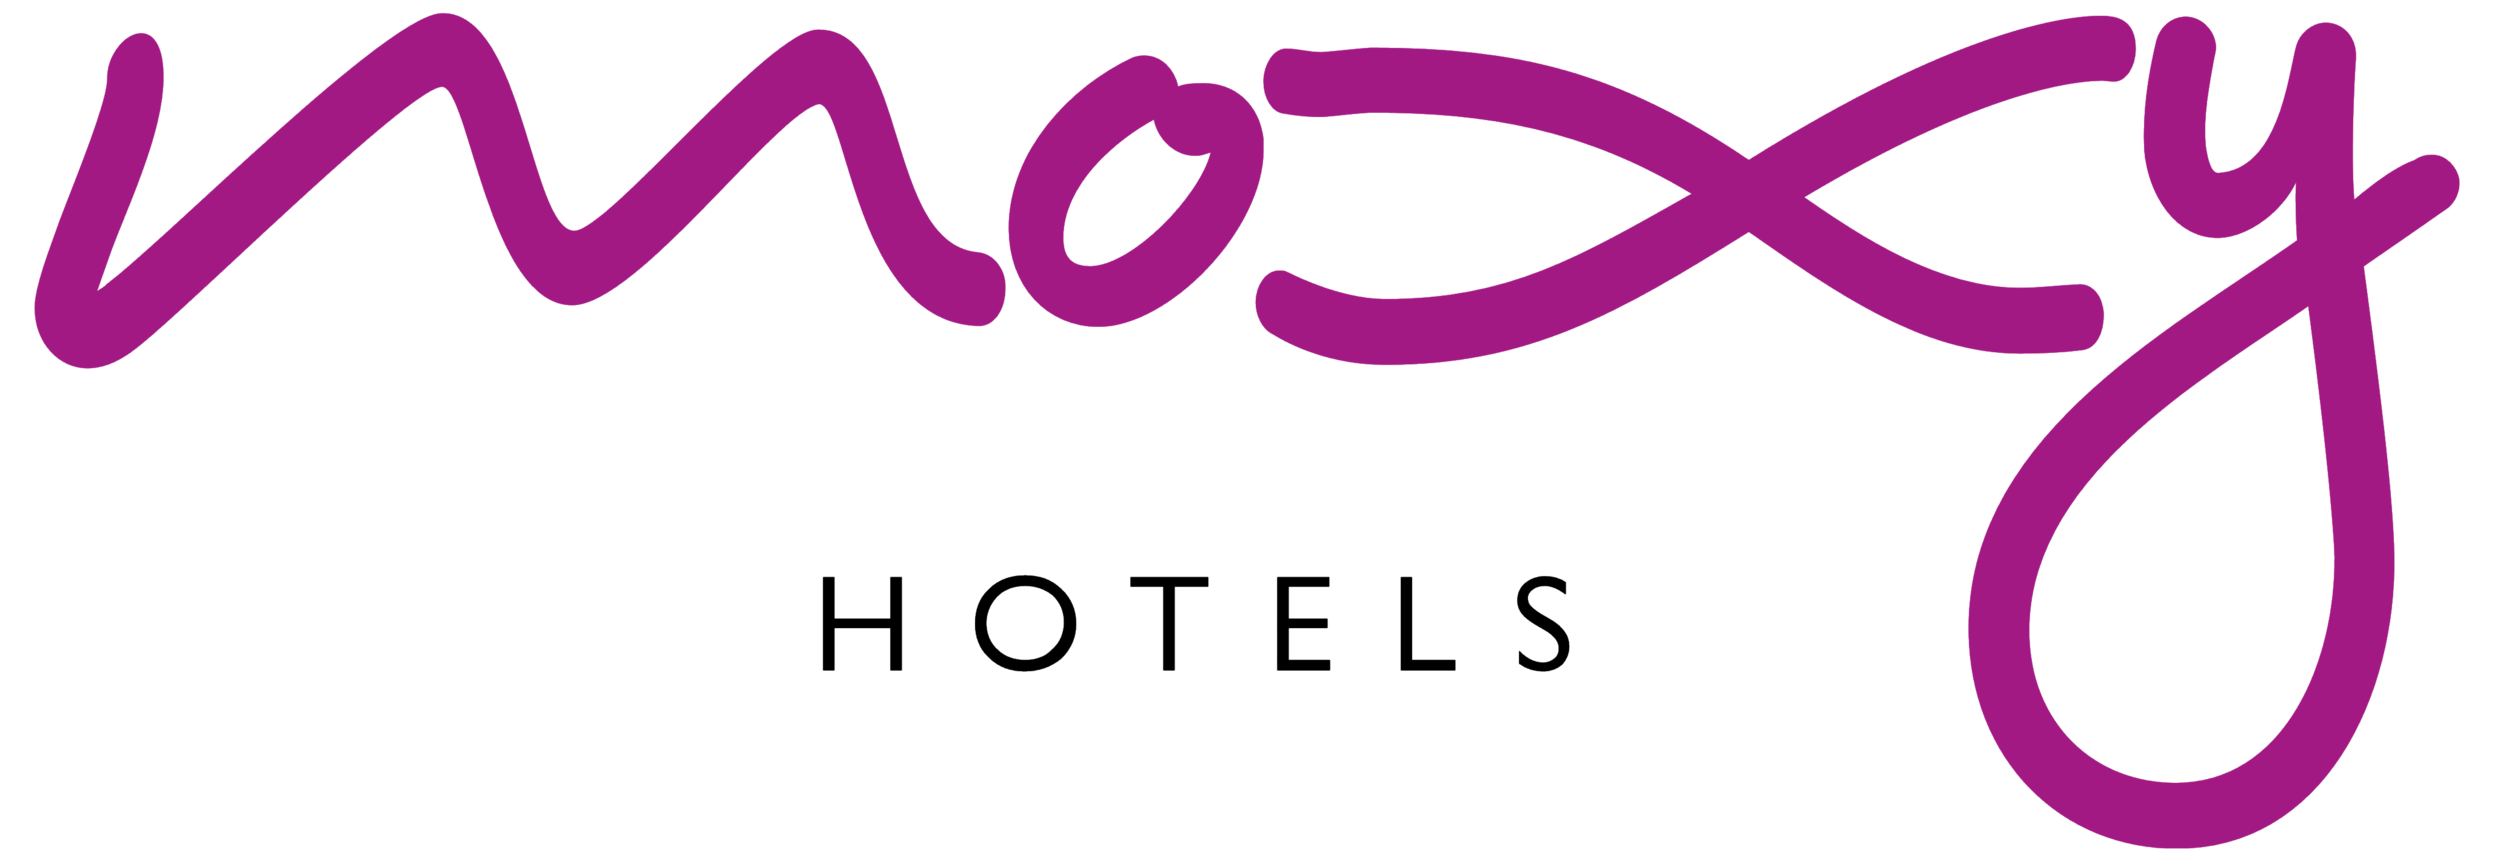 Moxy_Hotels_logo_logotype.png